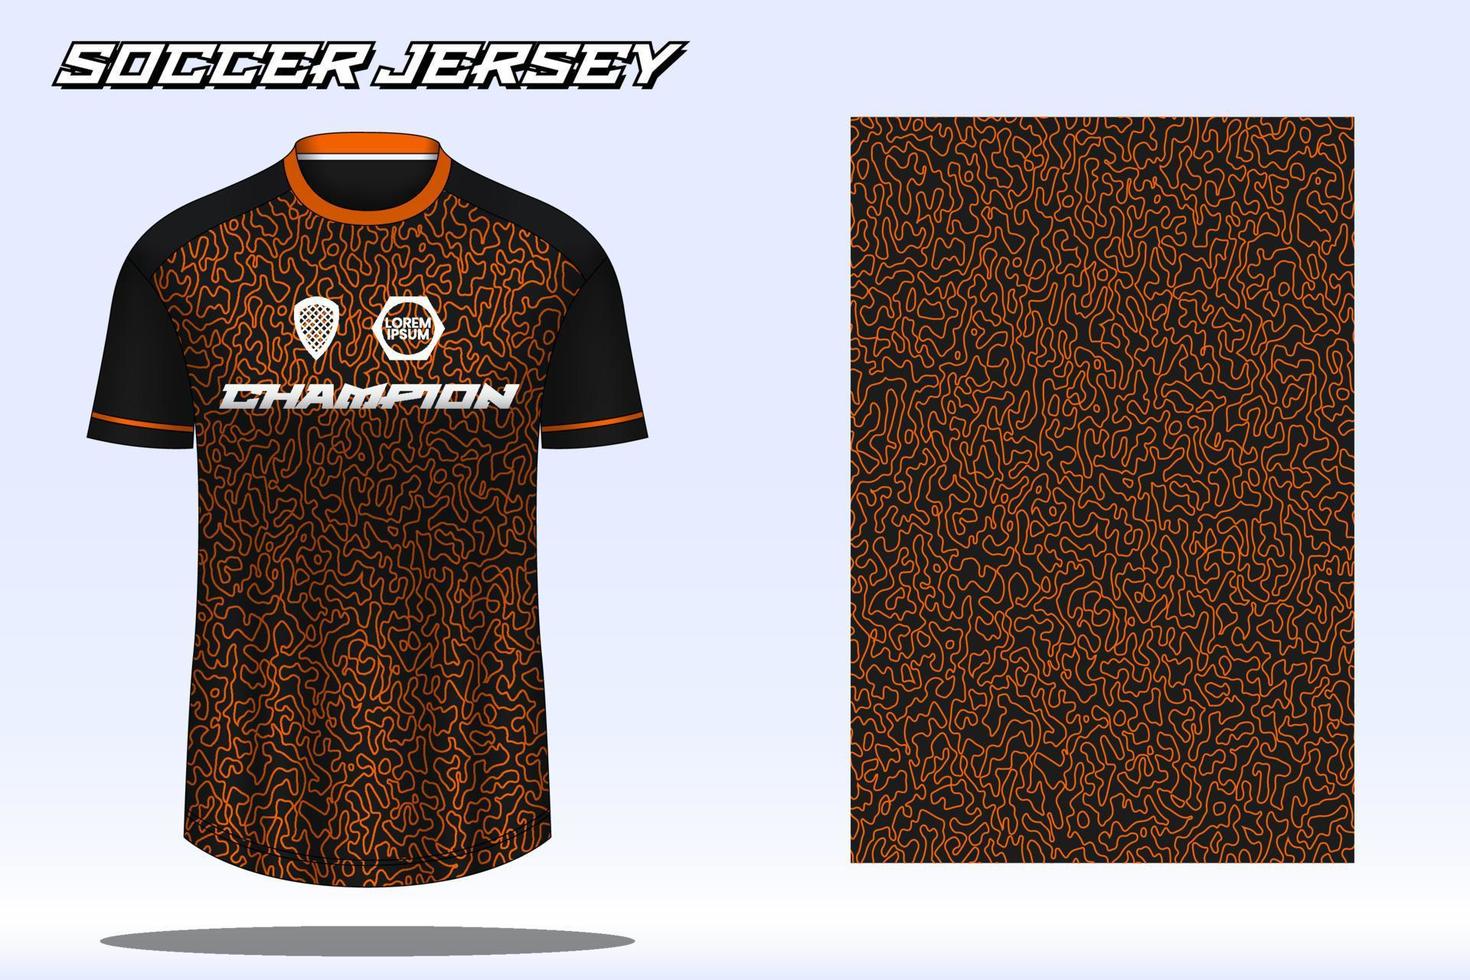 Soccer jersey sport t-shirt design mockup for football club 08 vector